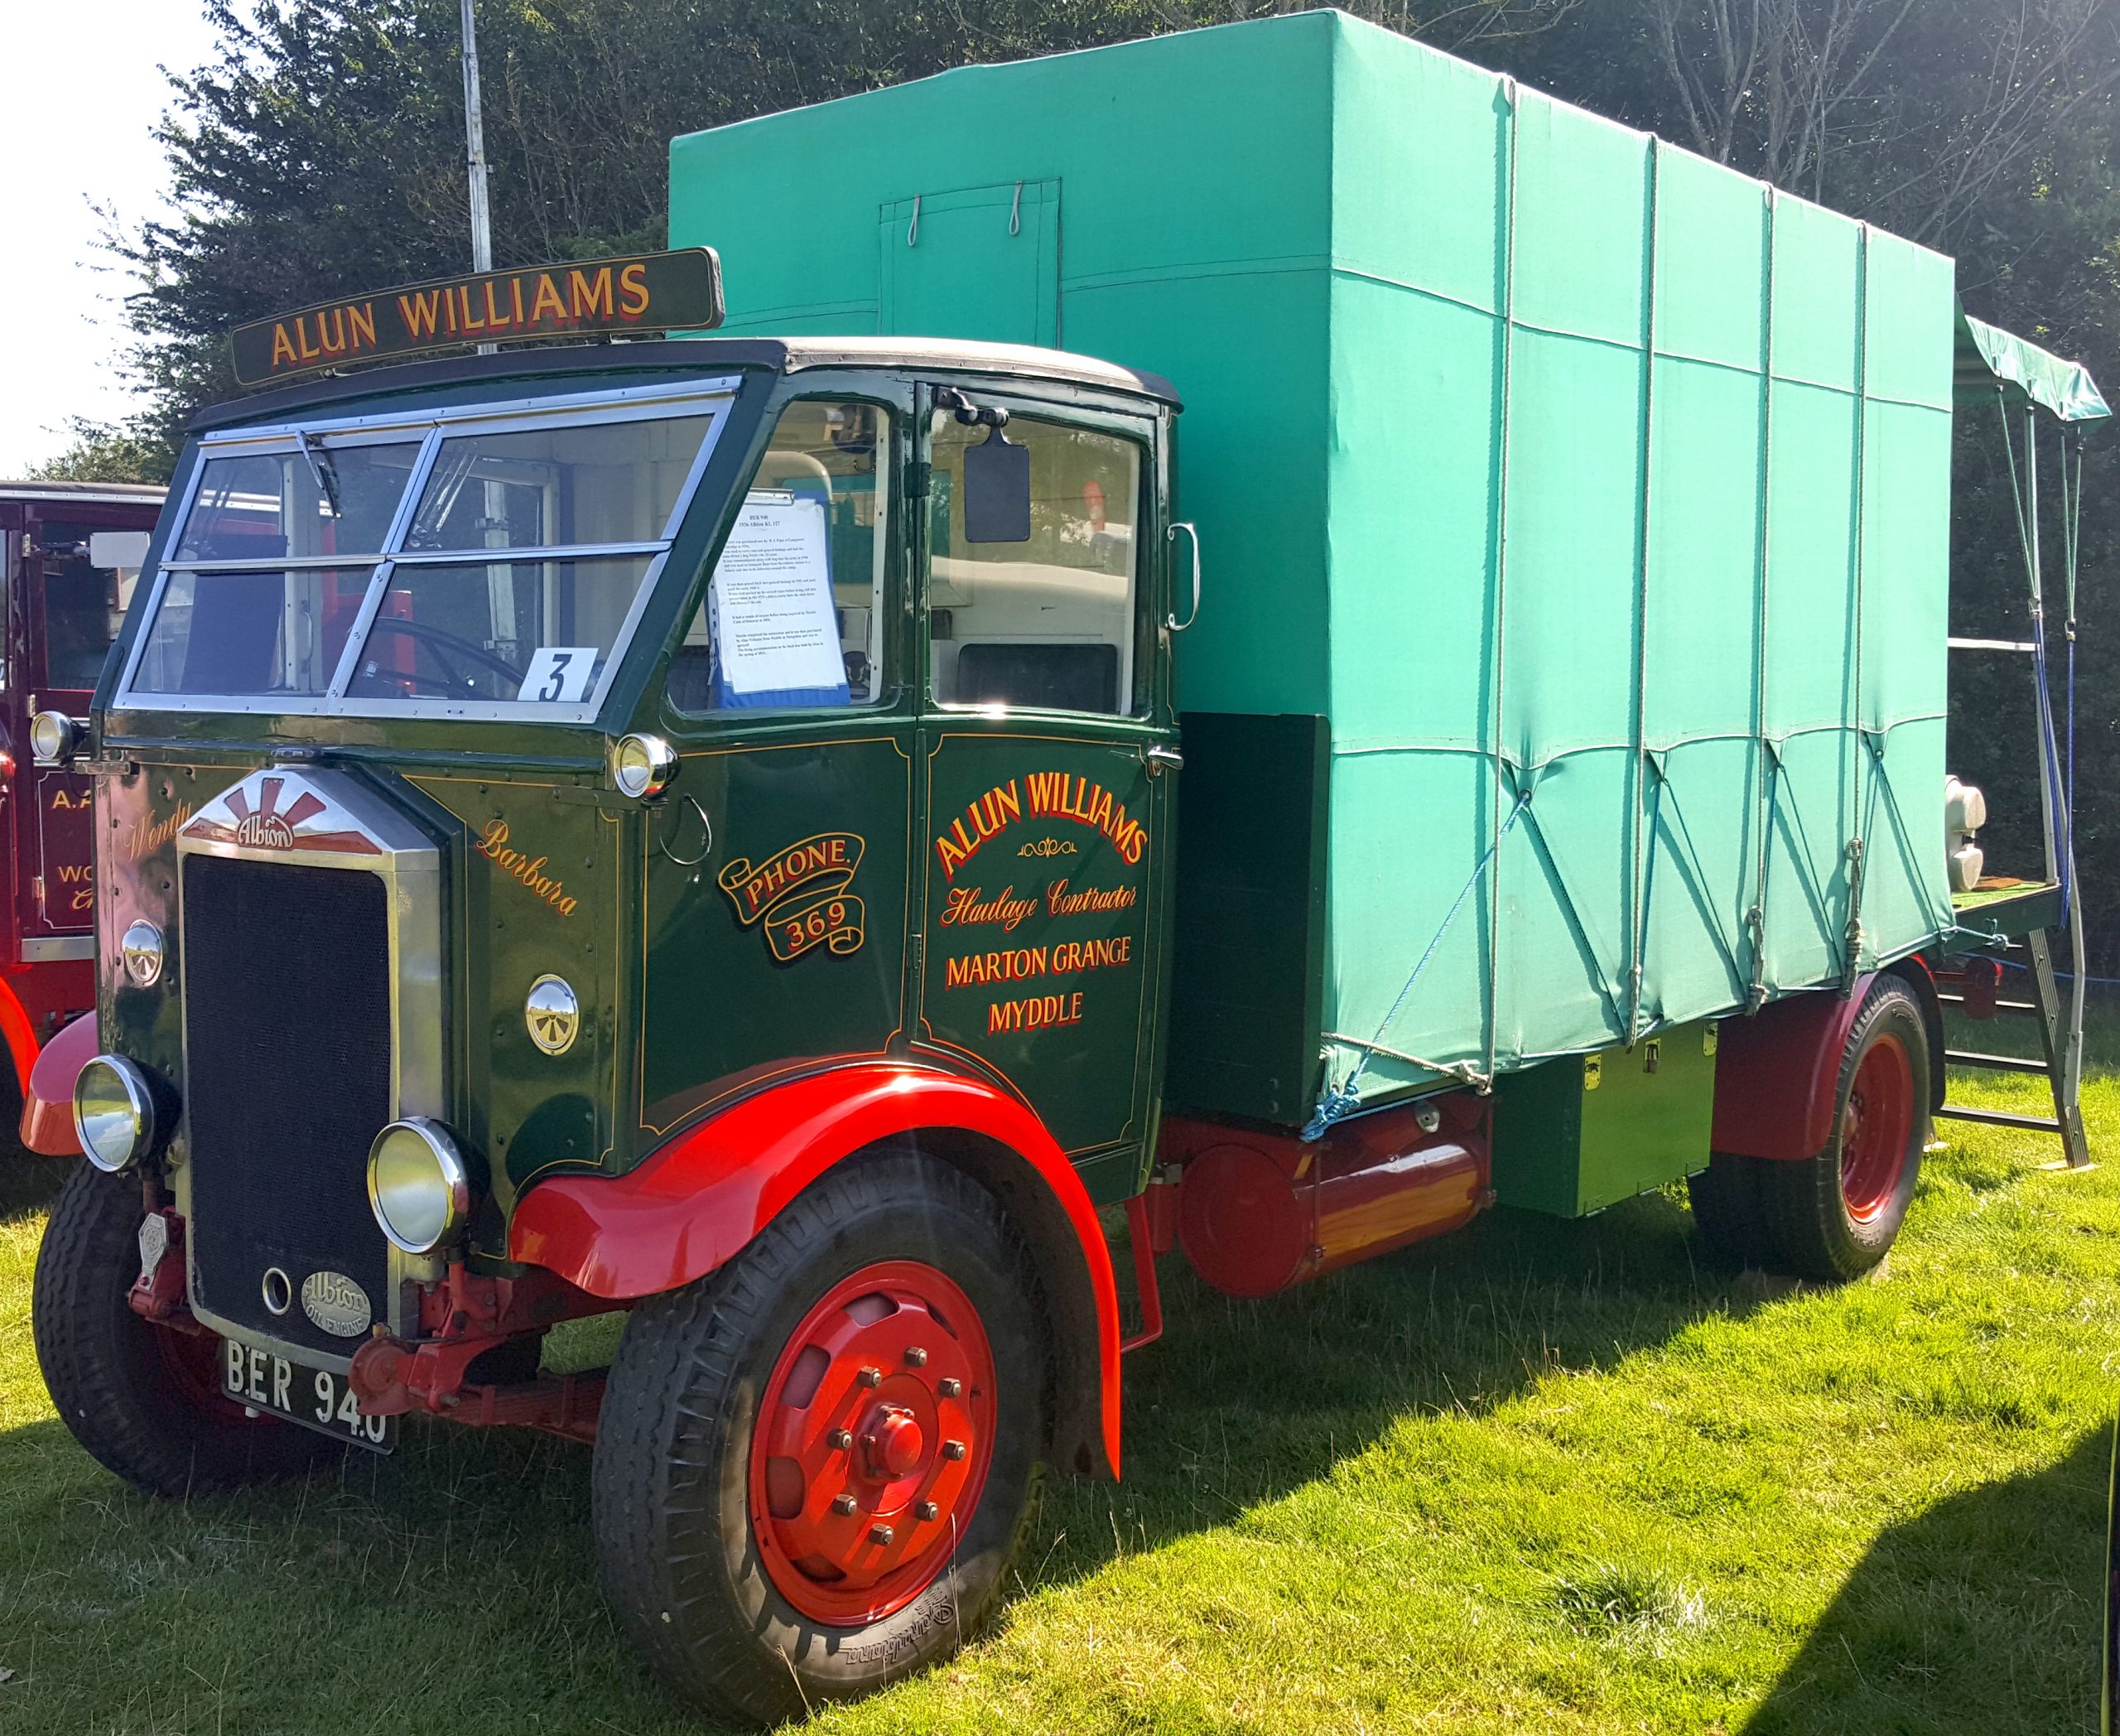 Alun-Williams-Haulage-Contractors-Marton-Grange-Myddle-Vintage-Albion-Truck-scaled